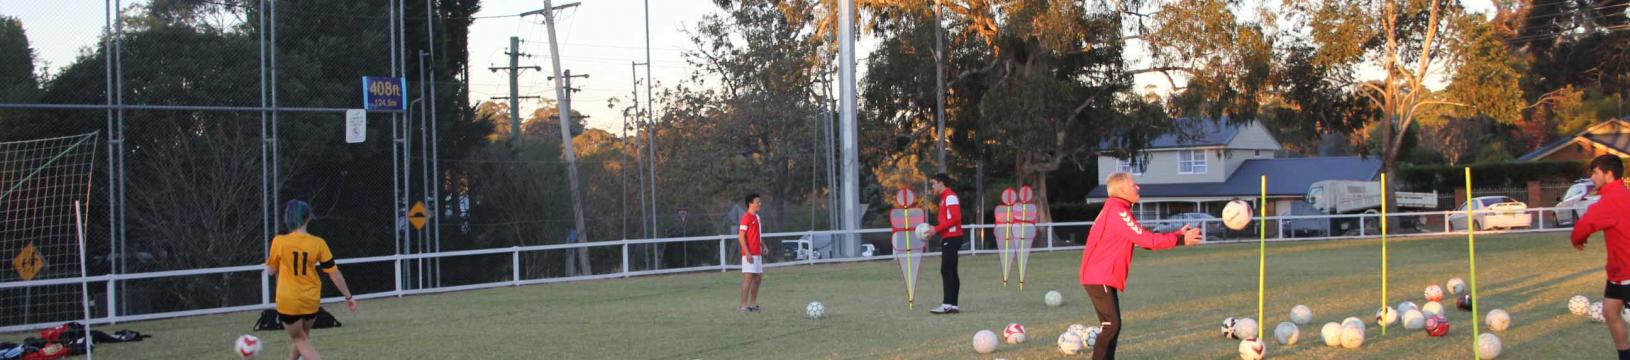 Soccer training session